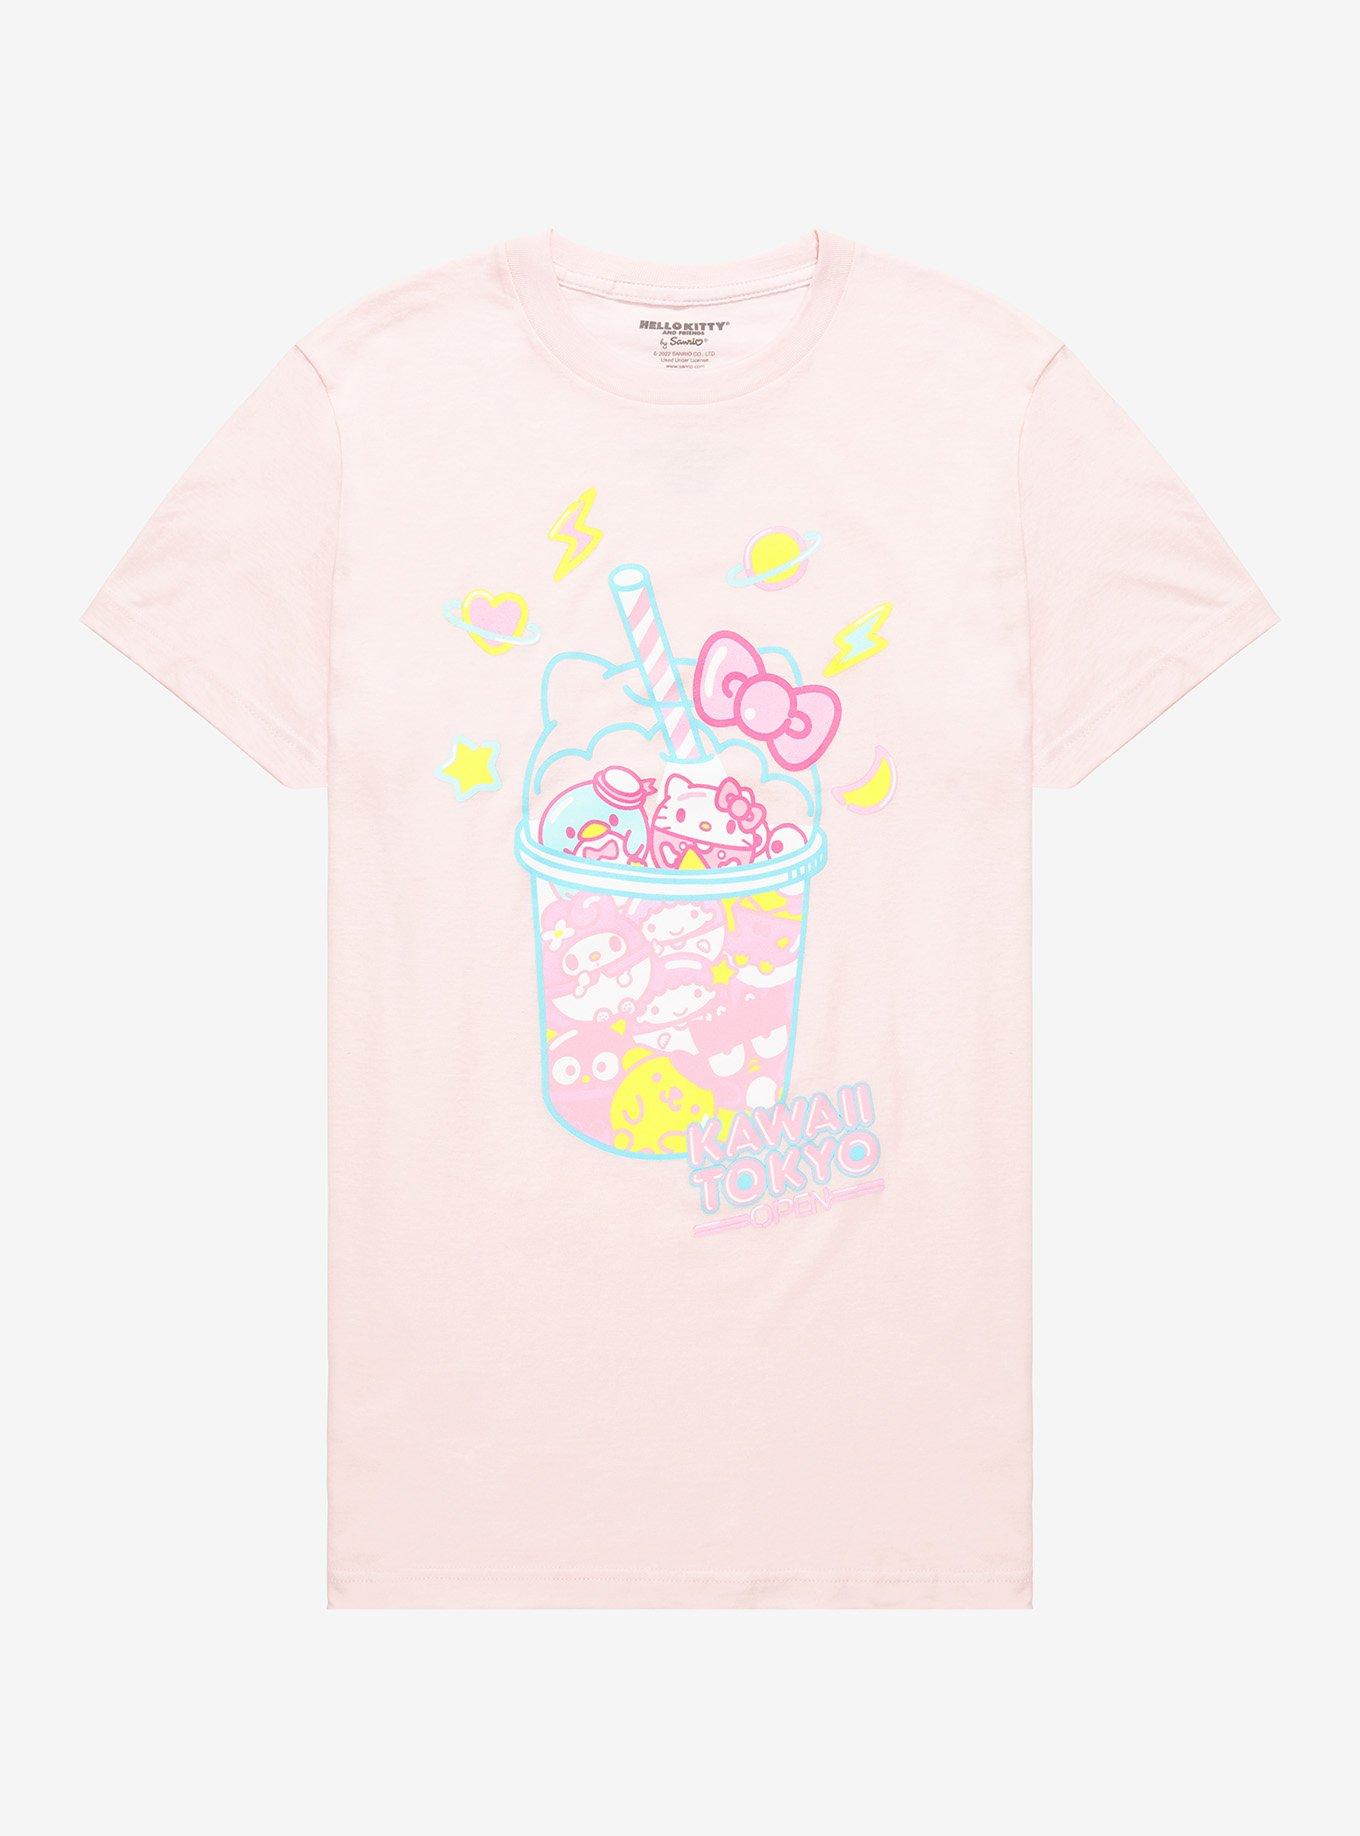 Hello Kitty And Friends Kawaii Tokyo Boba Girls T-Shirt